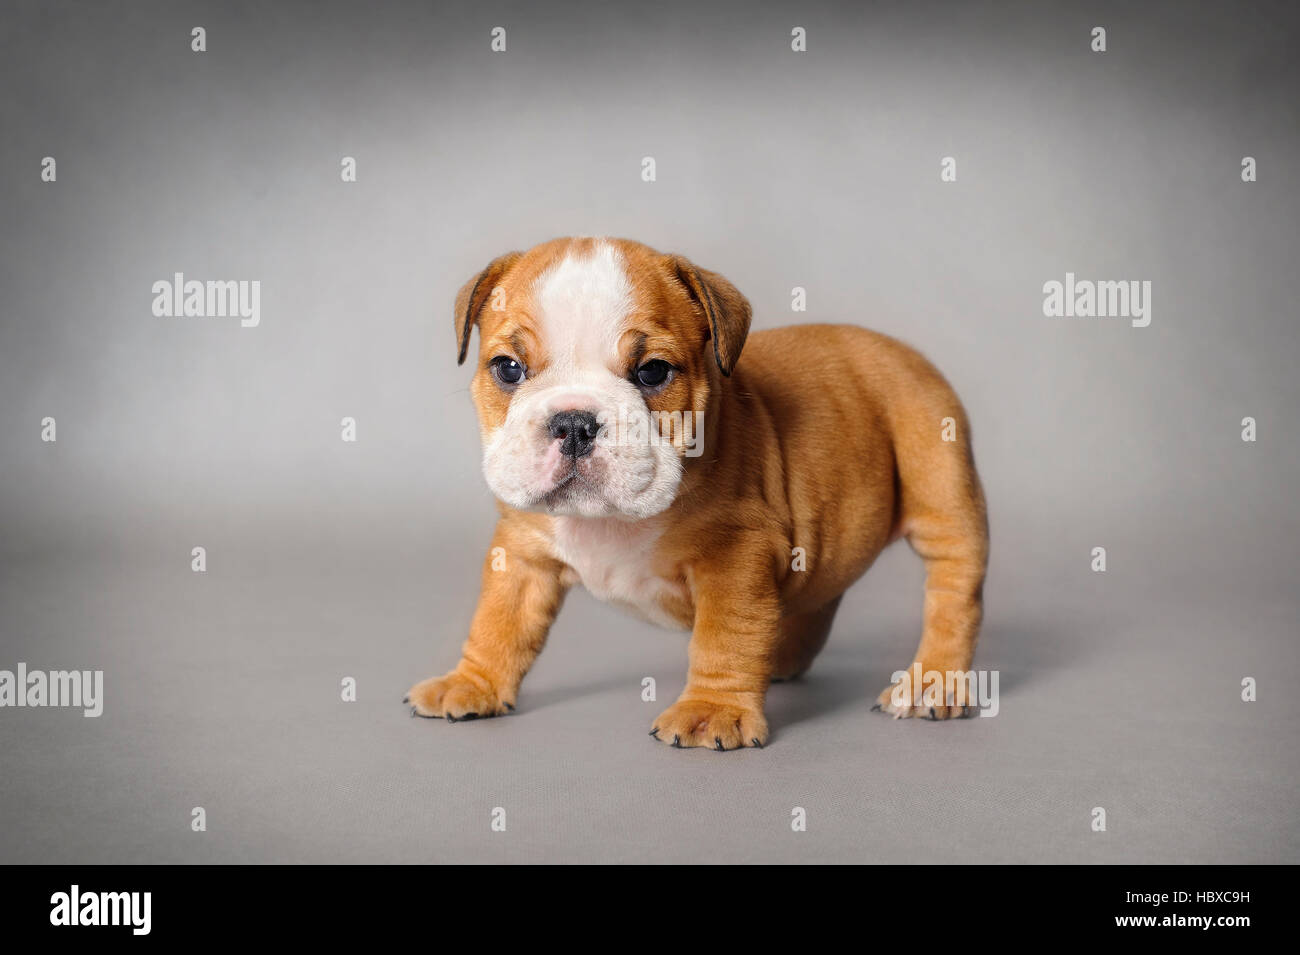 https://c8.alamy.com/comp/HBXC9H/english-bulldog-puppy-on-grey-background-HBXC9H.jpg